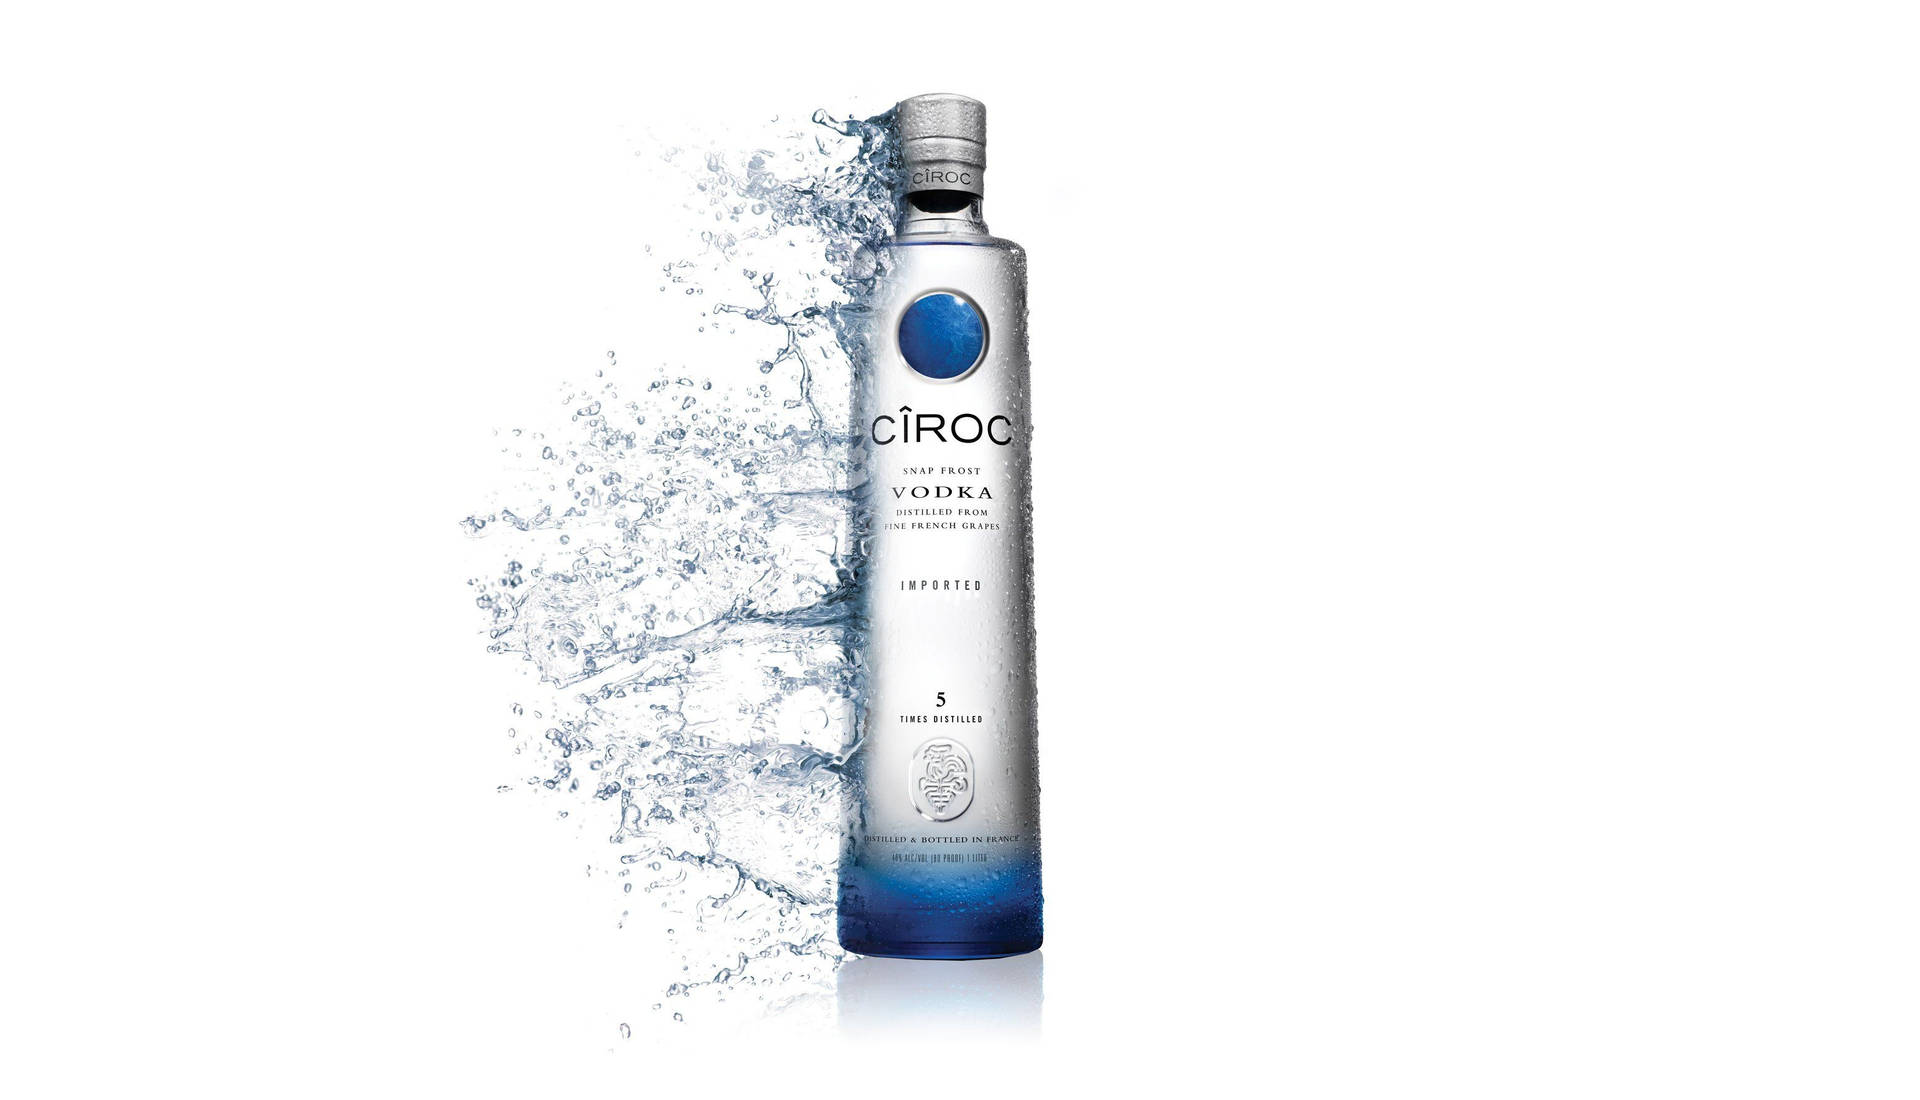 Ciroc French Vodka Bottle Water Splash Graphic Art Wallpaper